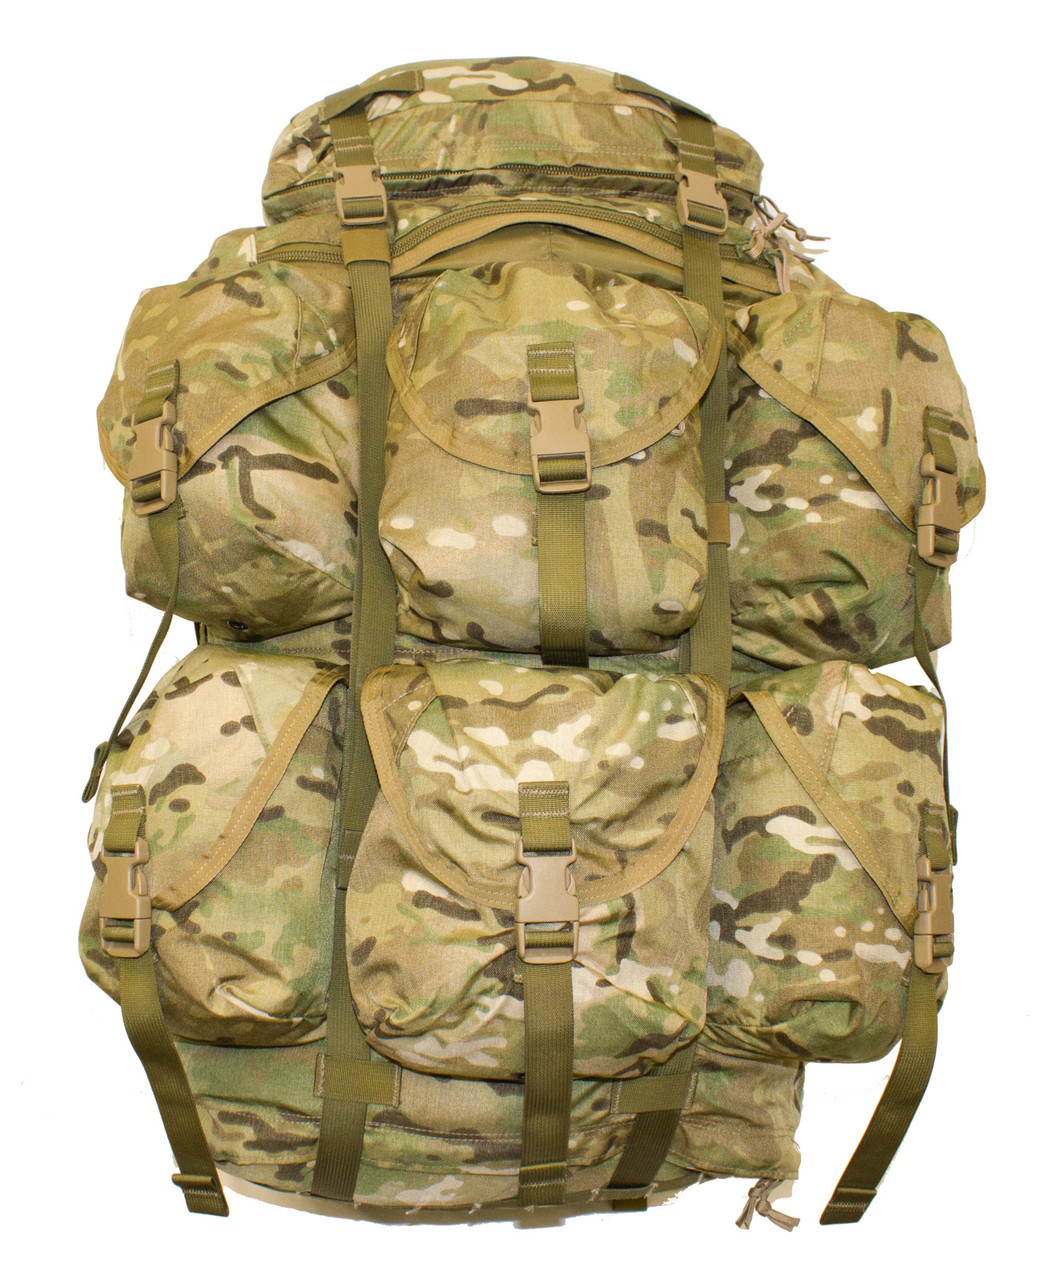 LBT-2657 Eight Pocket Light Backpack Kit - Thunderhead Outfitters